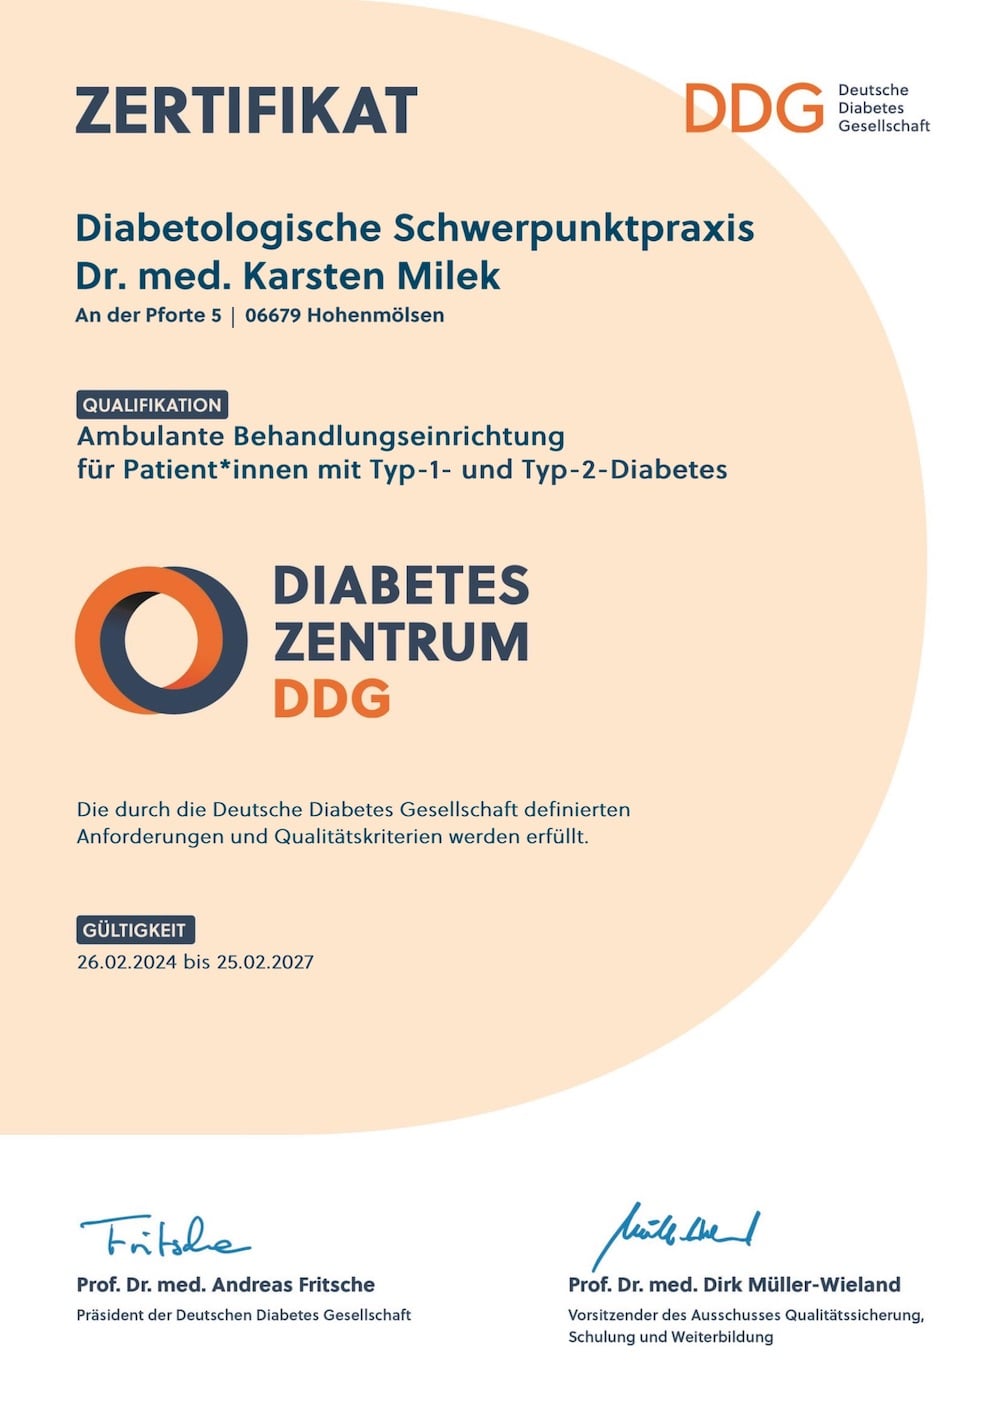 Zertifikat Diabetologische Schwerpunktpraxis vom Diabetes Zentrum der Deutschen Diabetes Gesellschaft